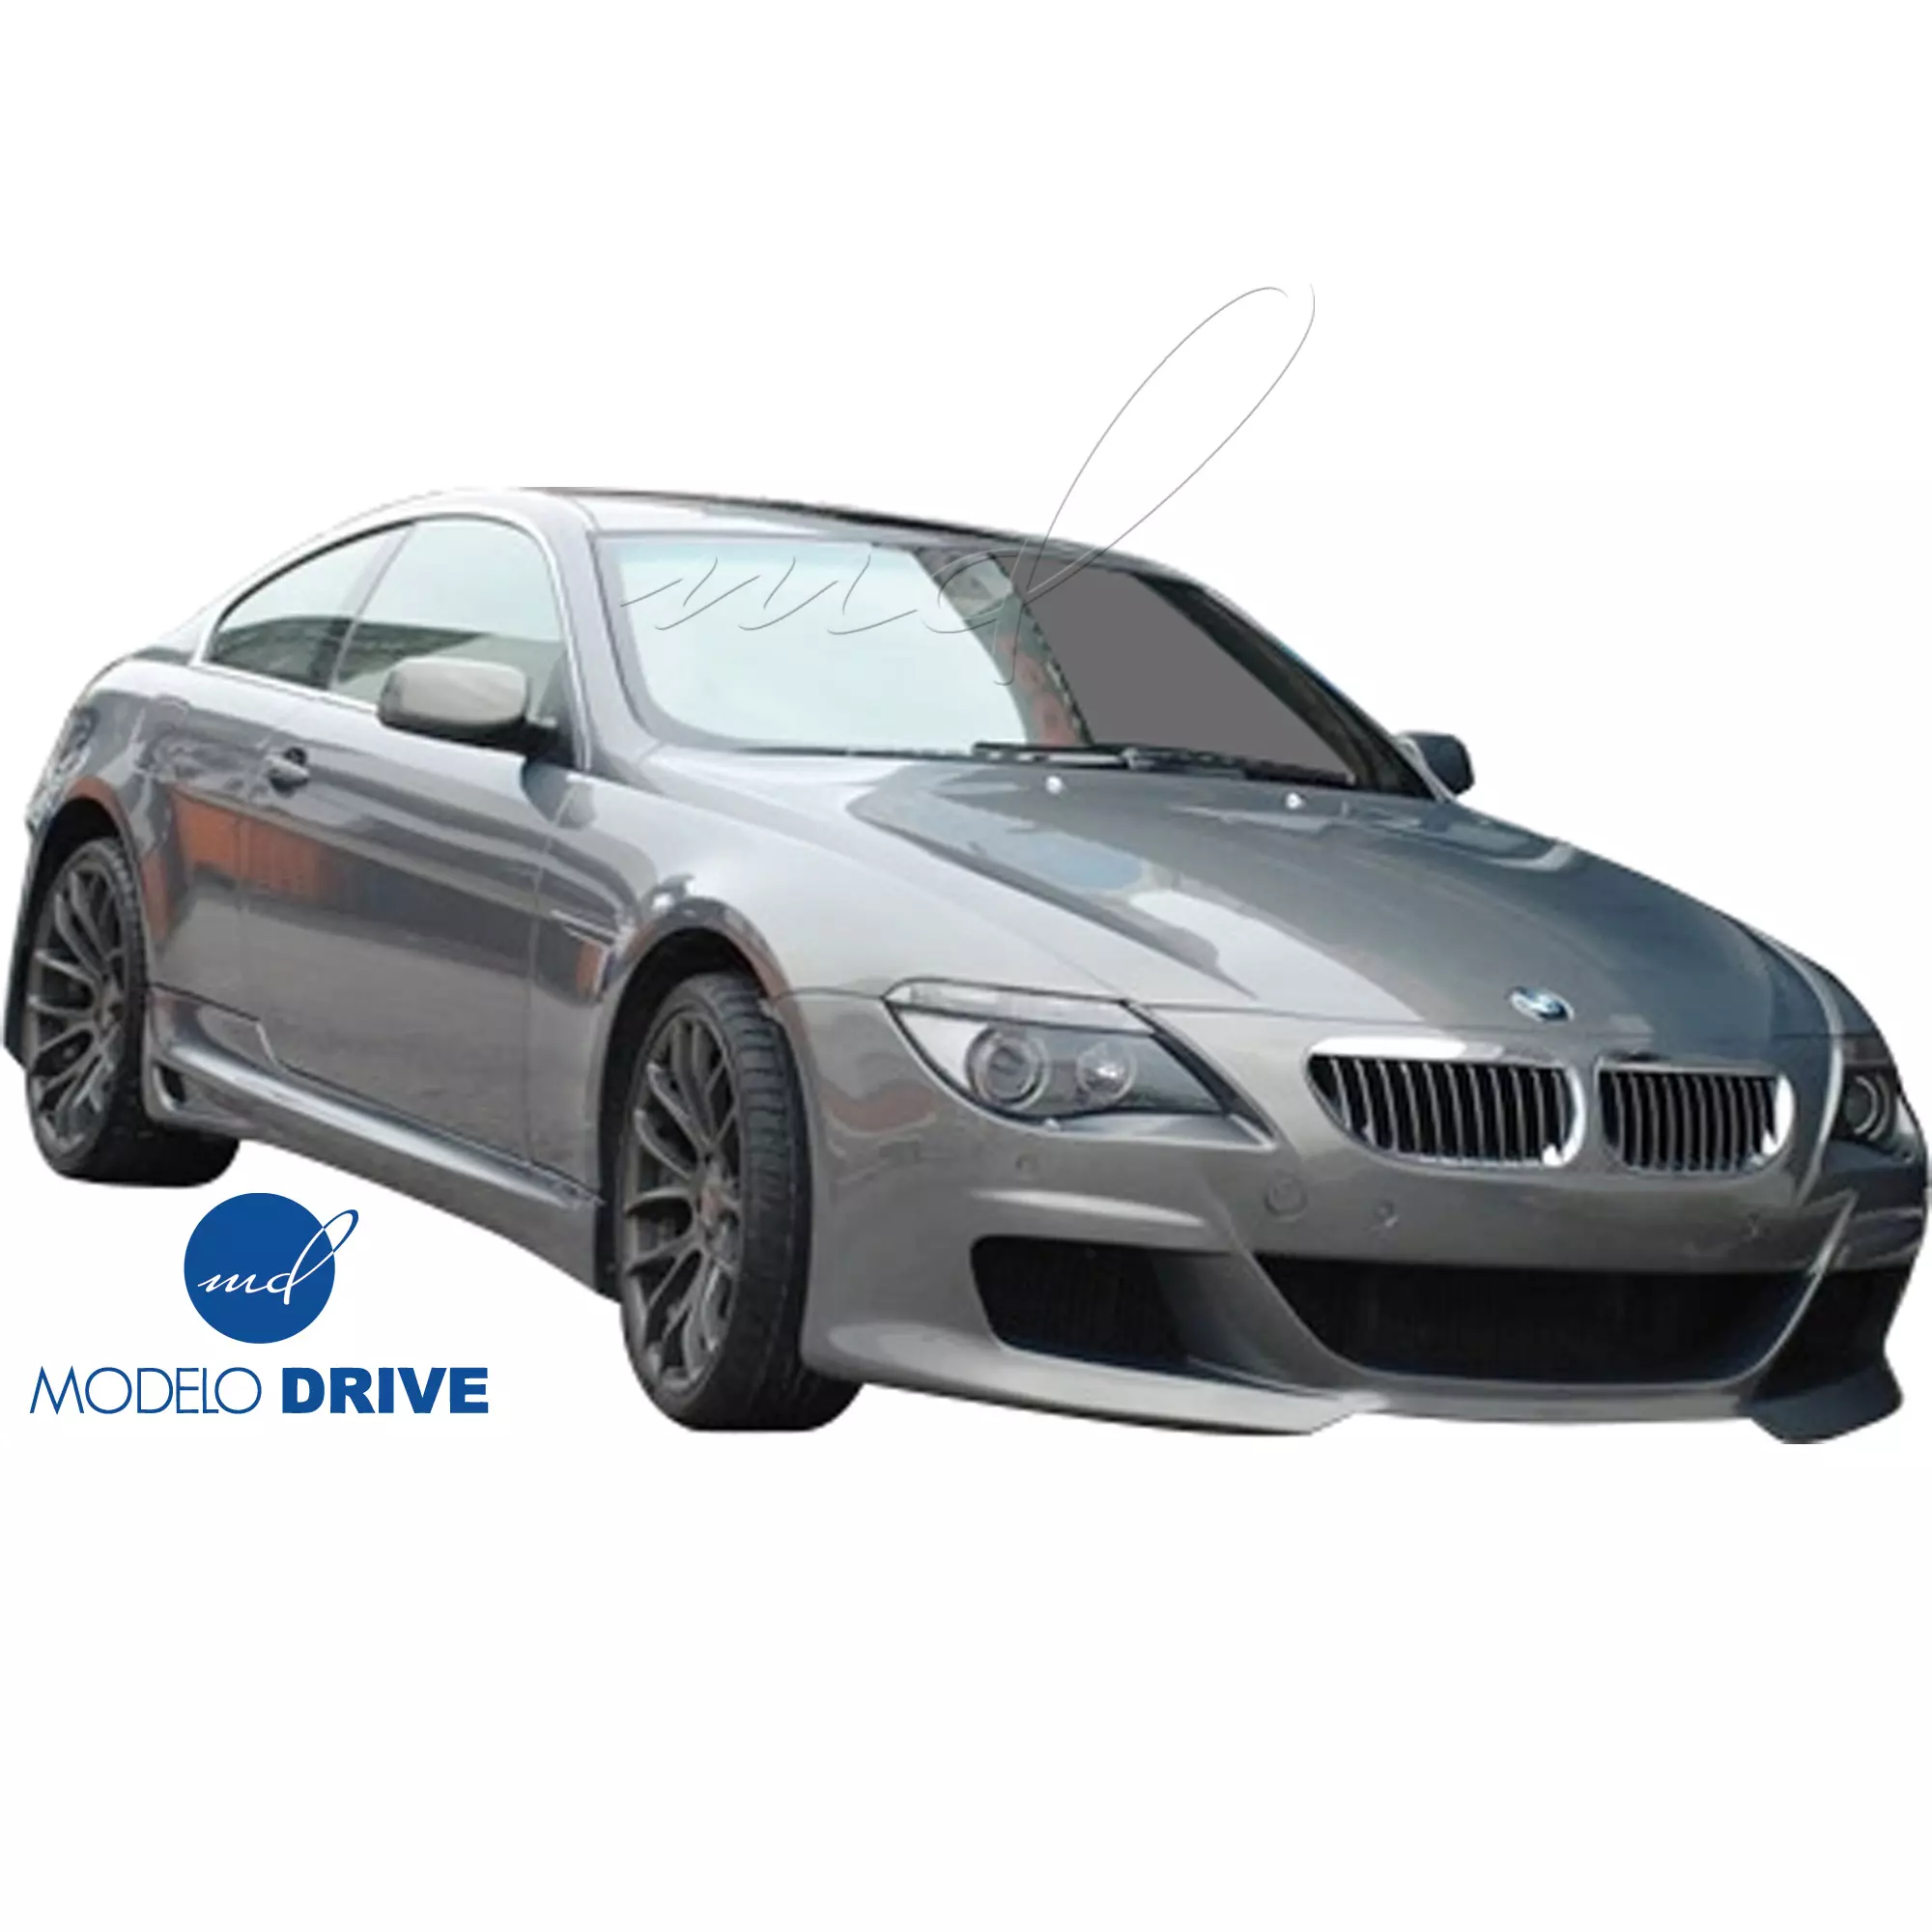 ModeloDrive FRP LDES Body Kit 4pc > BMW 6-Series E63 E64 2004-2010 > 2dr - Image 11